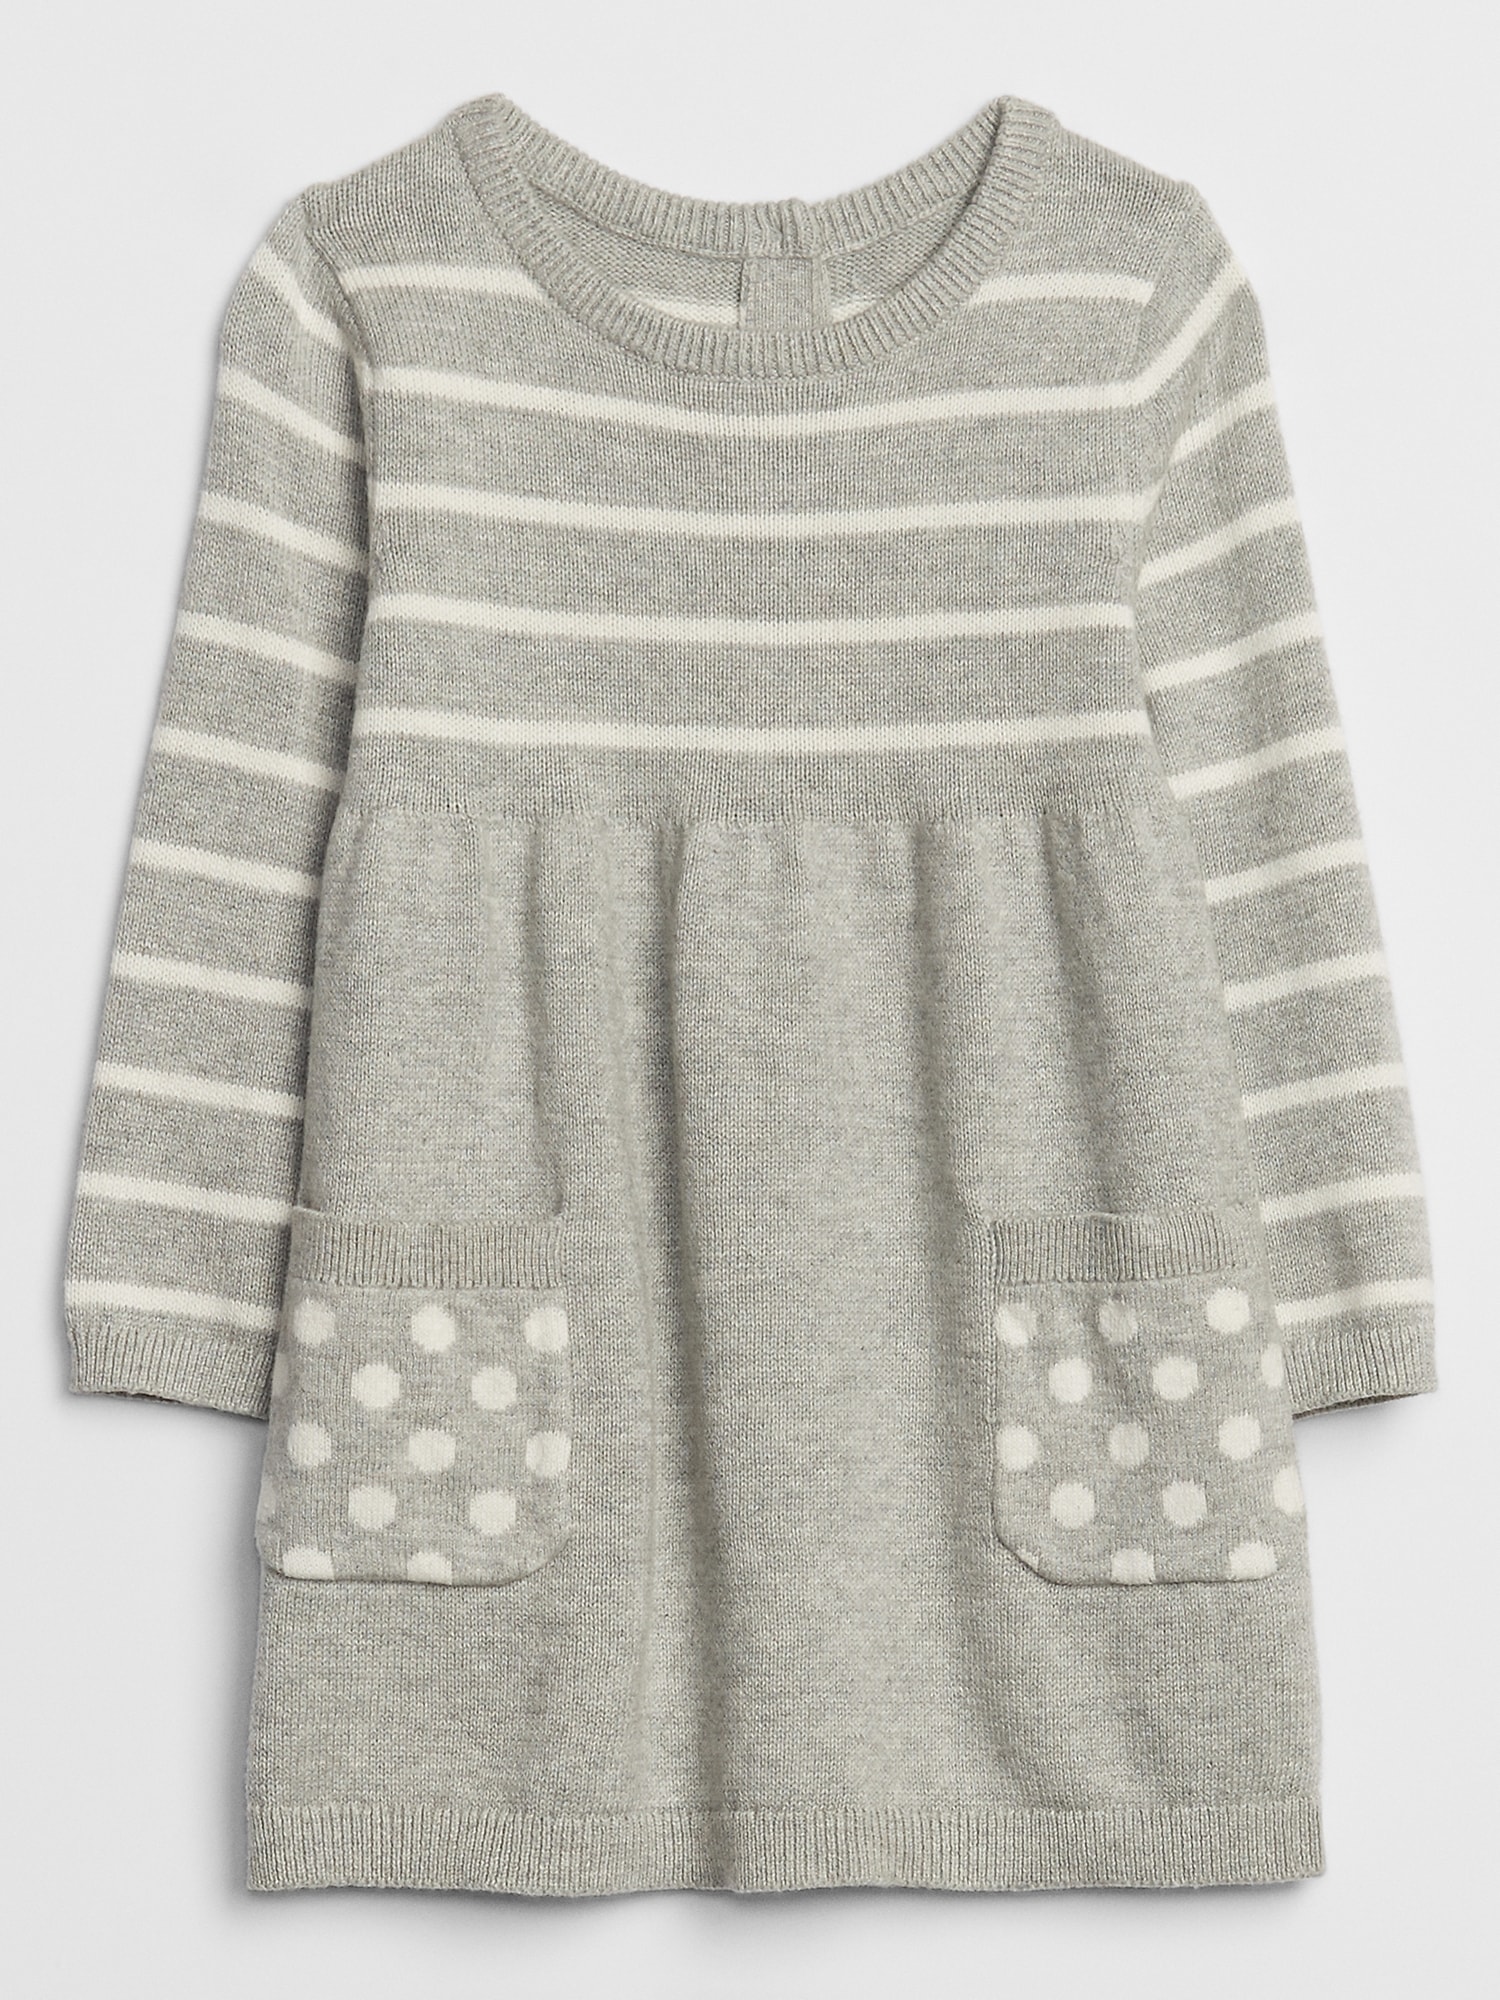 baby gap sweater dress